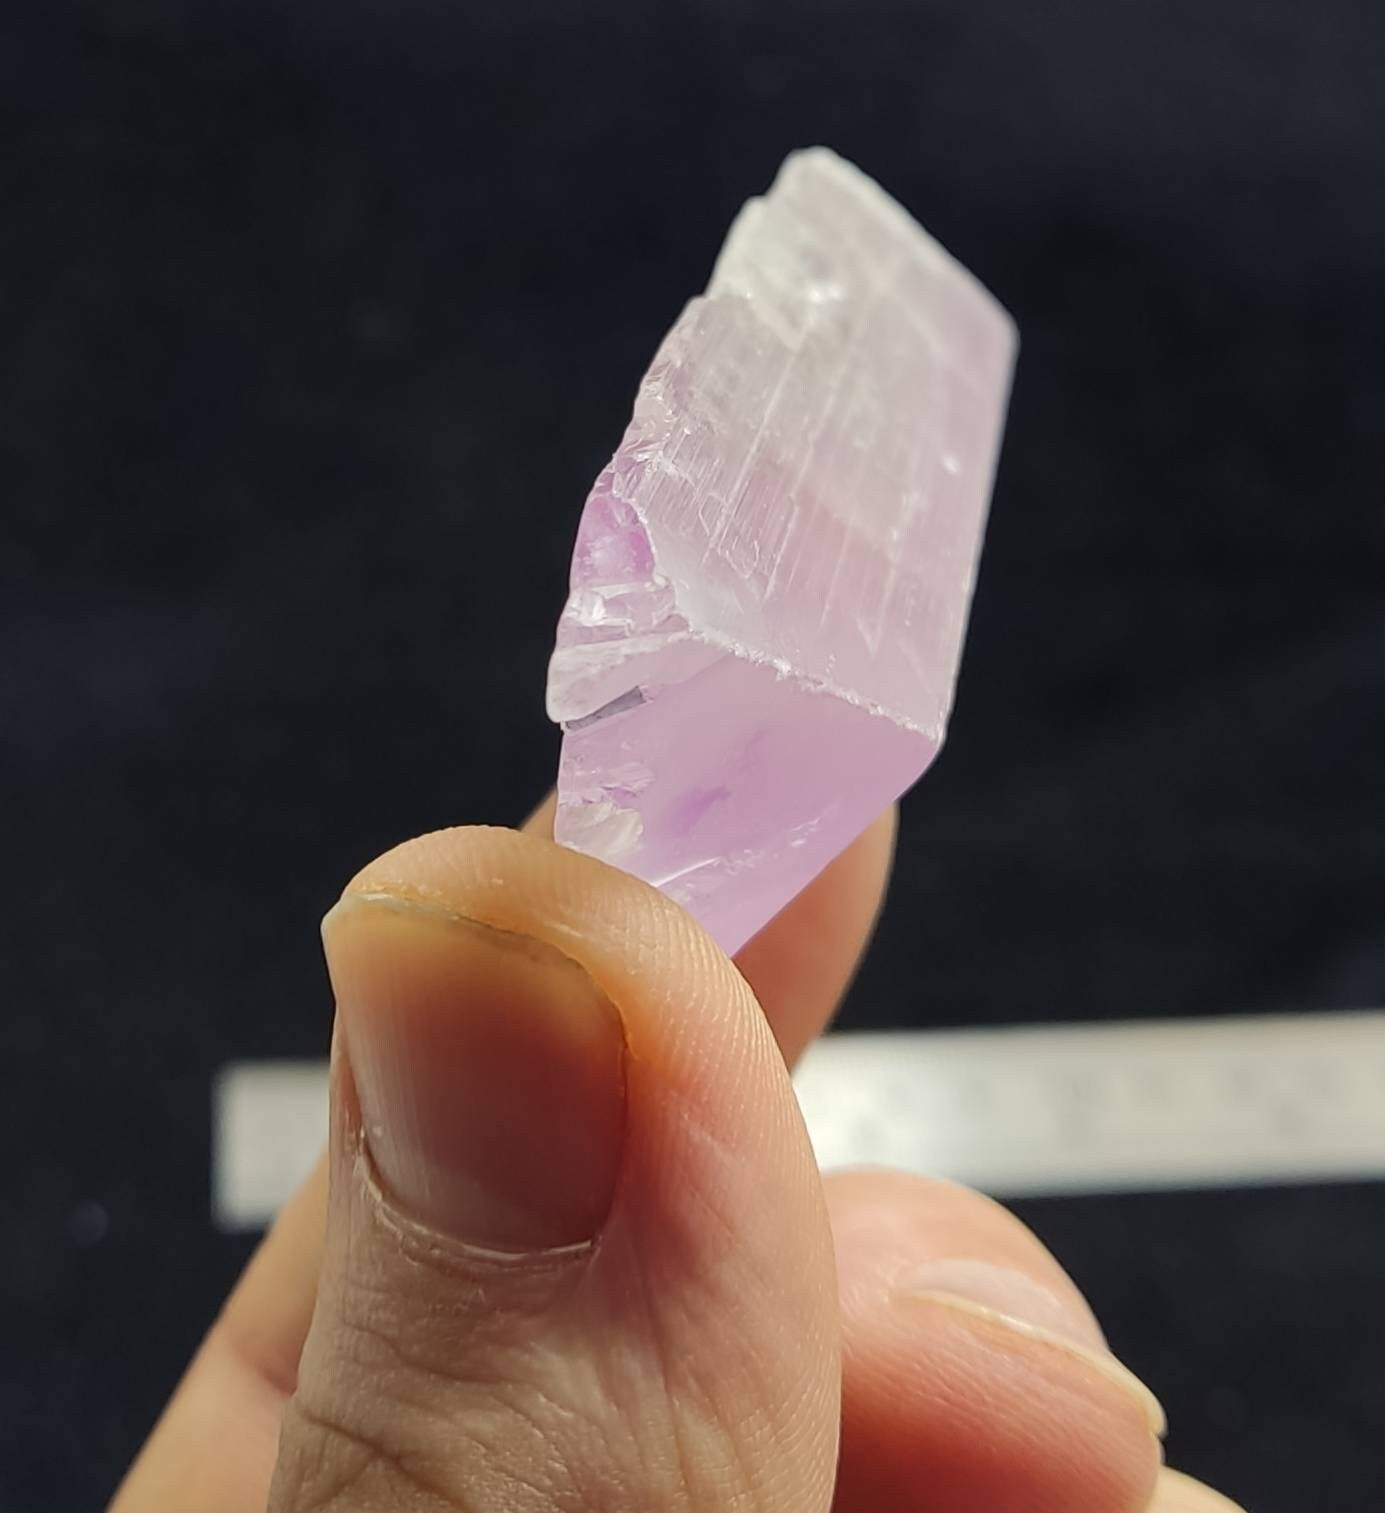 An amazing terminated purple crystal specimen of kunzite 63 grams